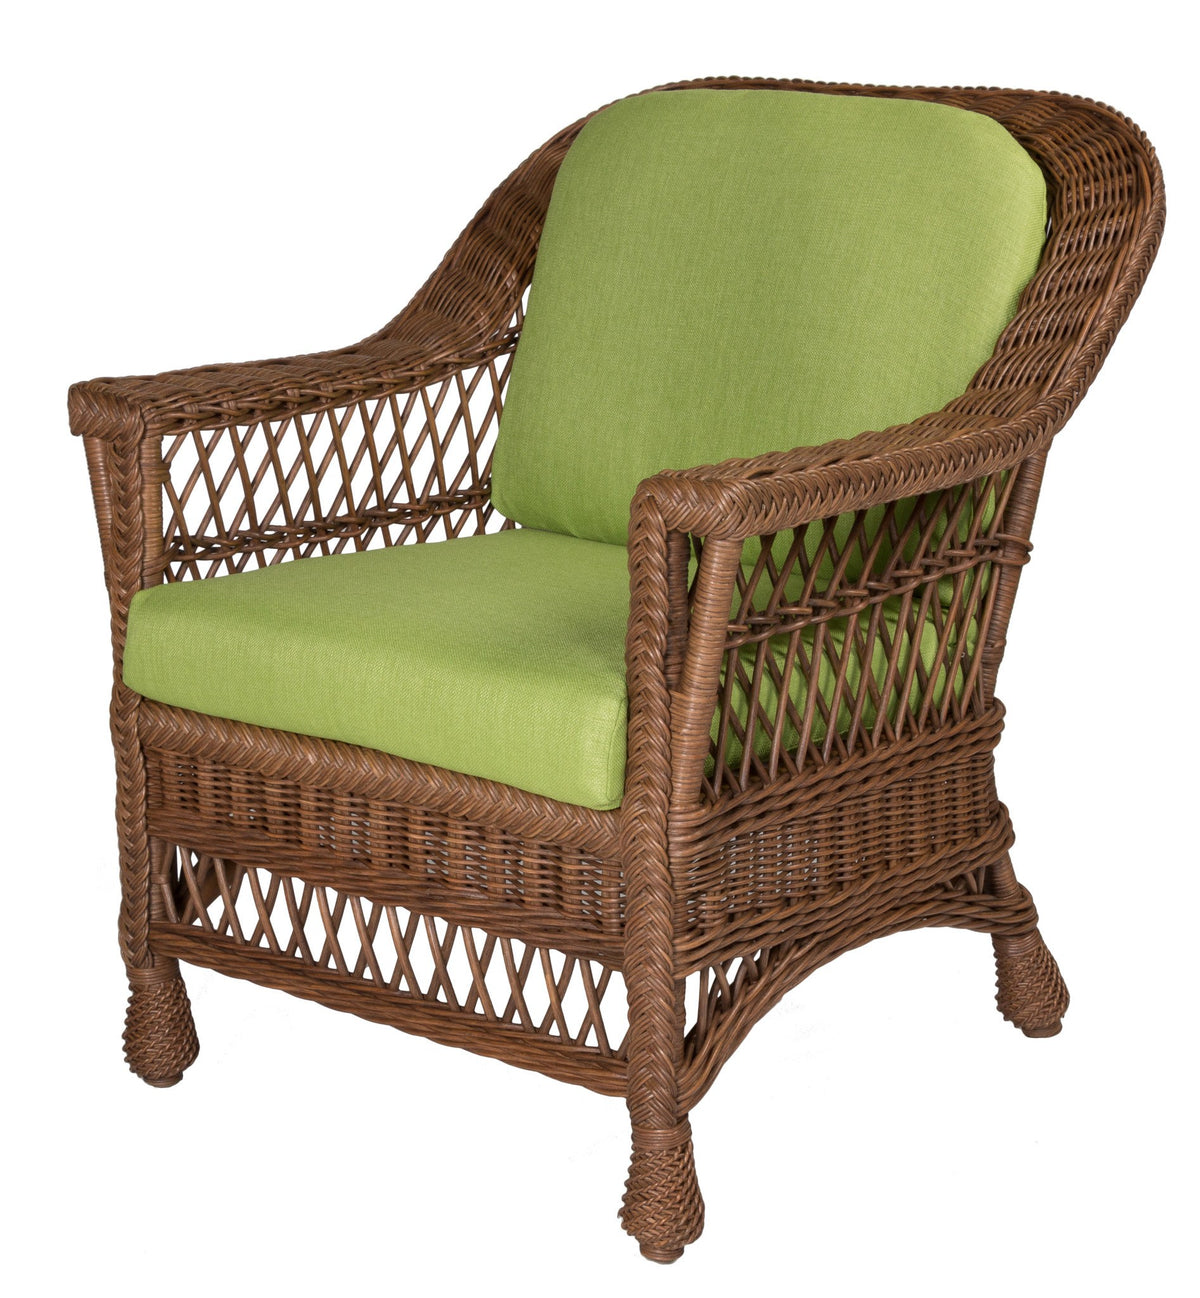 Designer Wicker &amp; Rattan By Tribor Harbor front Arm Chair by Designer Wicker from Tribor Chair - Rattan Imports